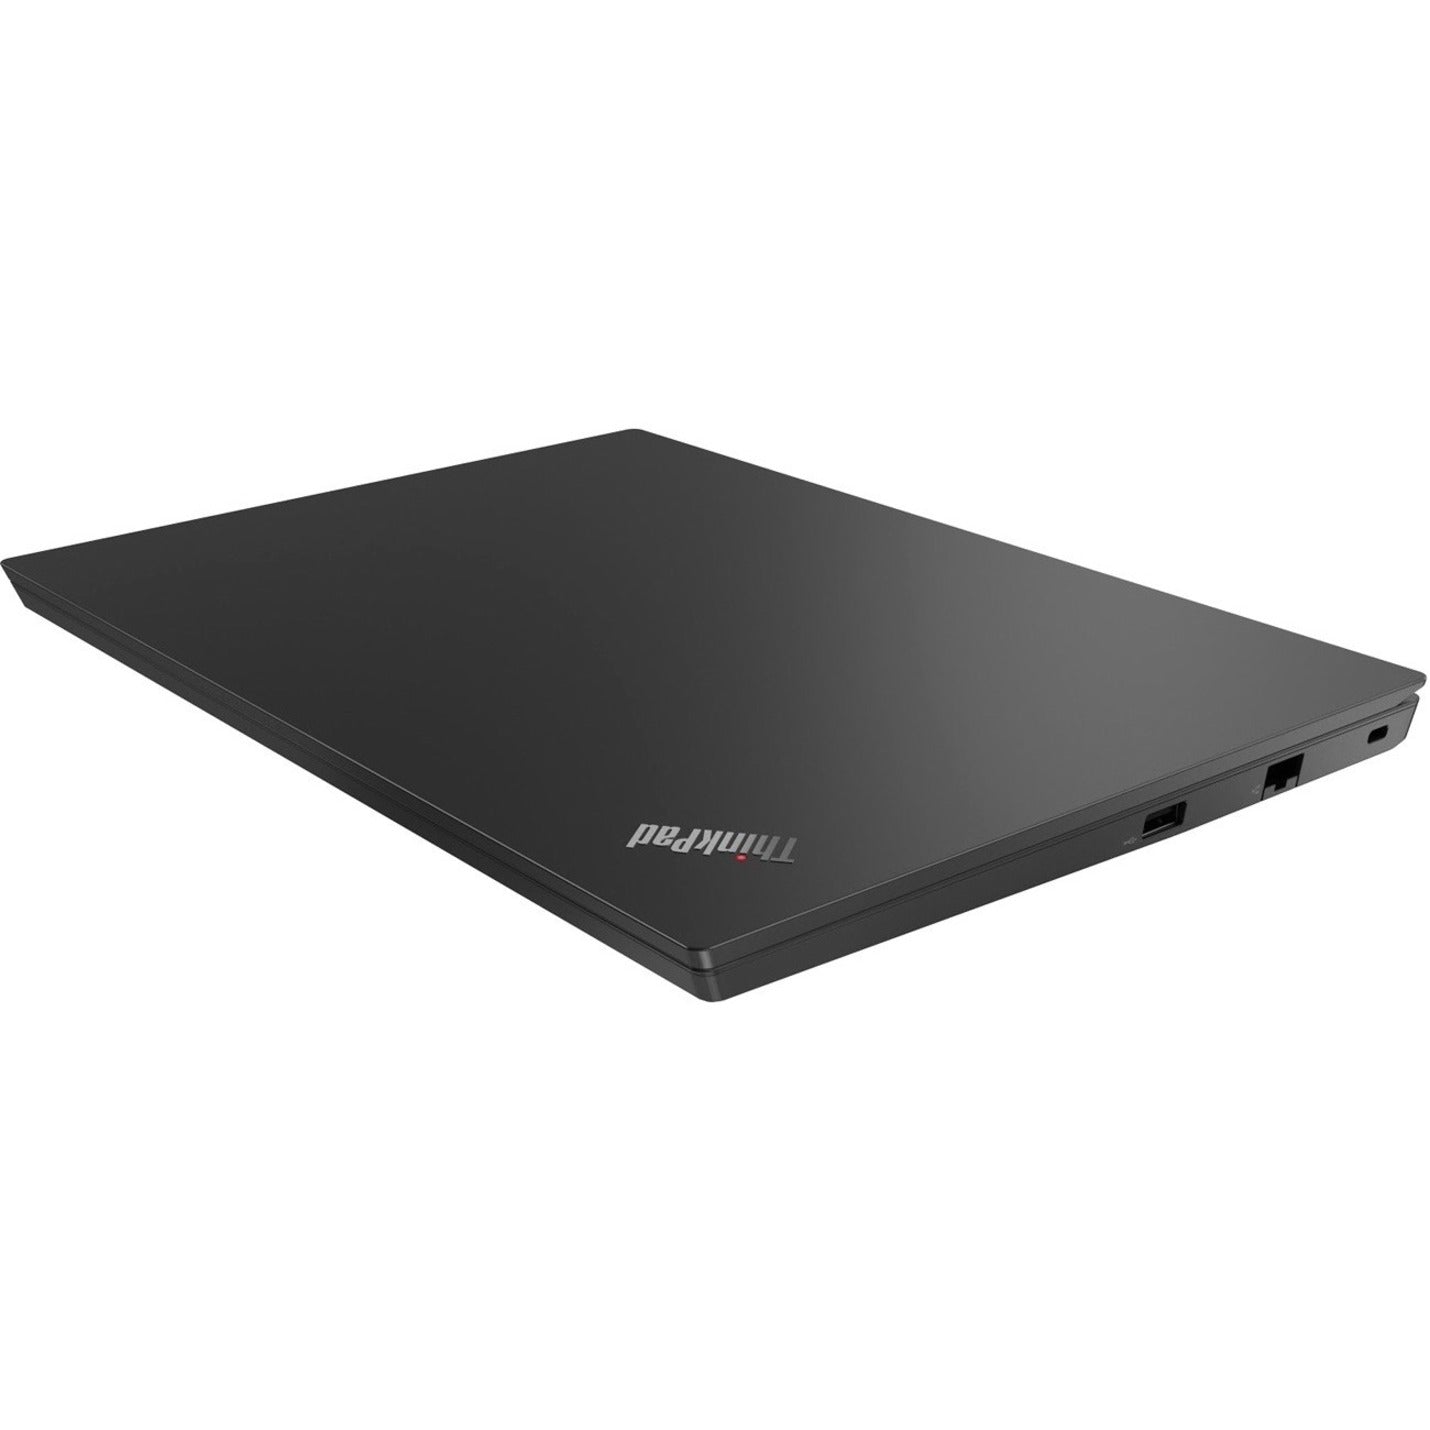 Lenovo 20Y70038US ThinkPad E14 Gen 3 (AMD) 14.0" Notebook, Ryzen 5, 16GB RAM, 256GB SSD, Windows 10 Pro